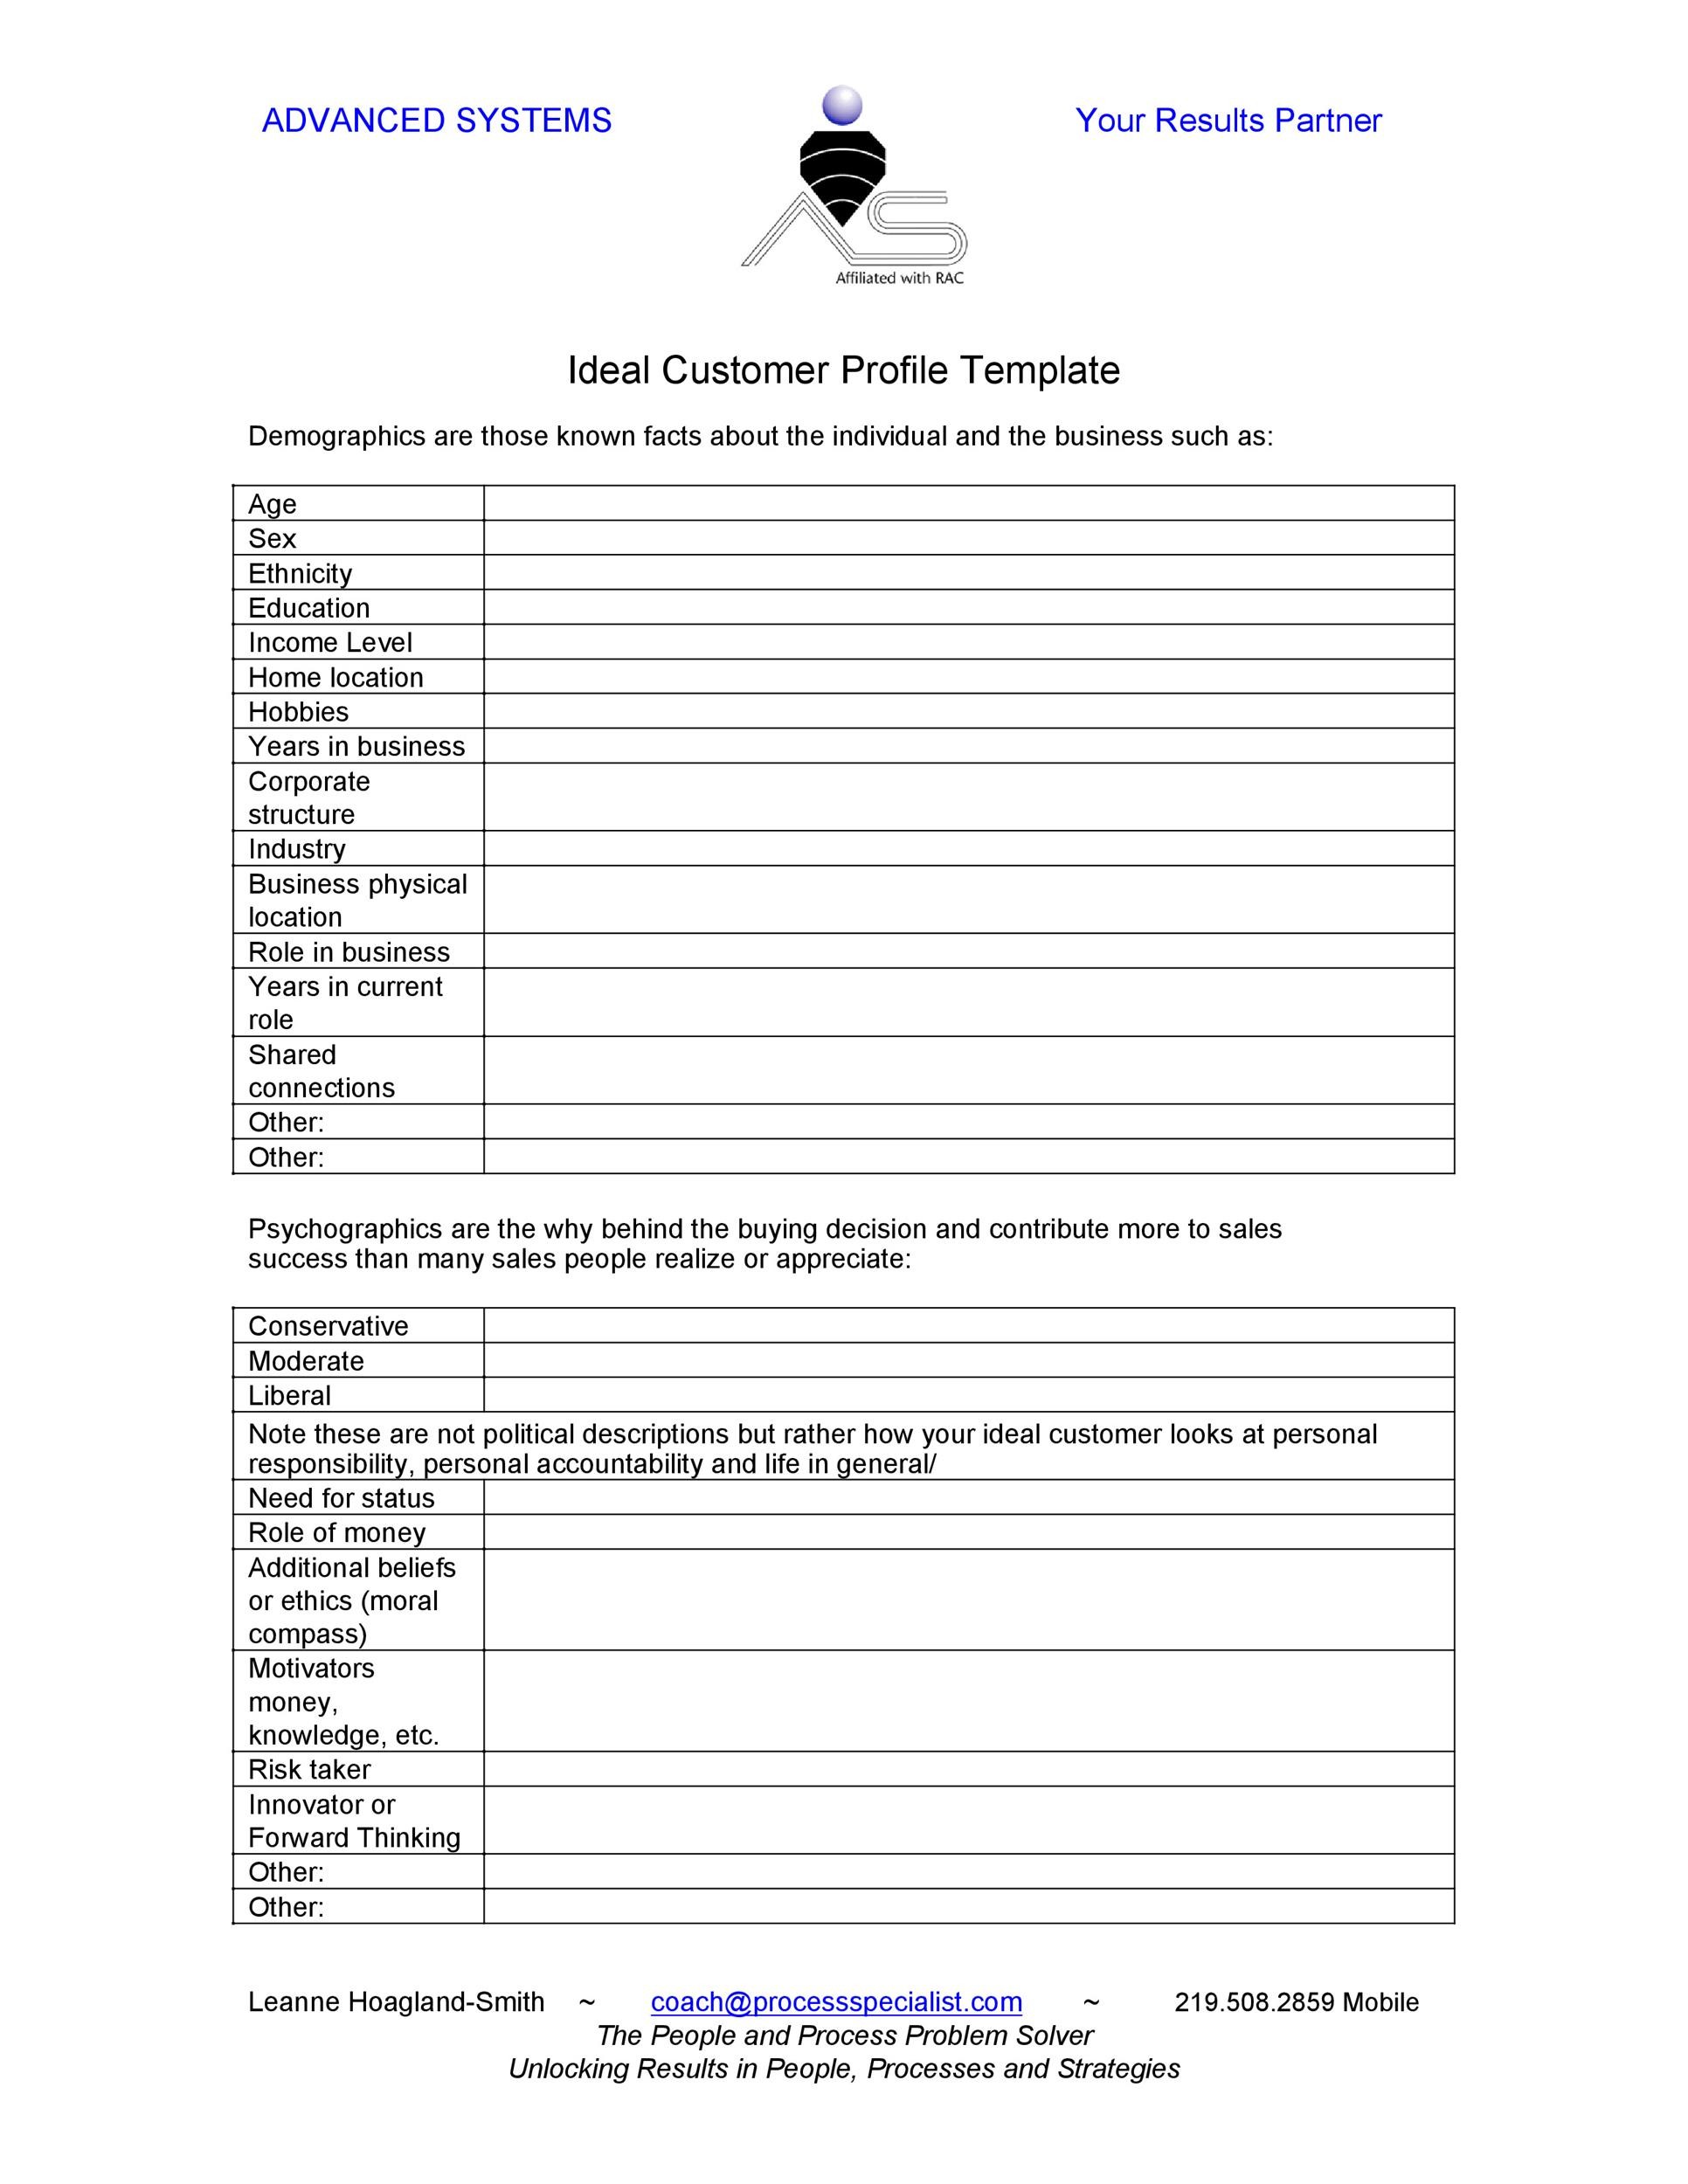 50 Ideal Customer Profile Templates (Word & Excel) ᐅ TemplateLab